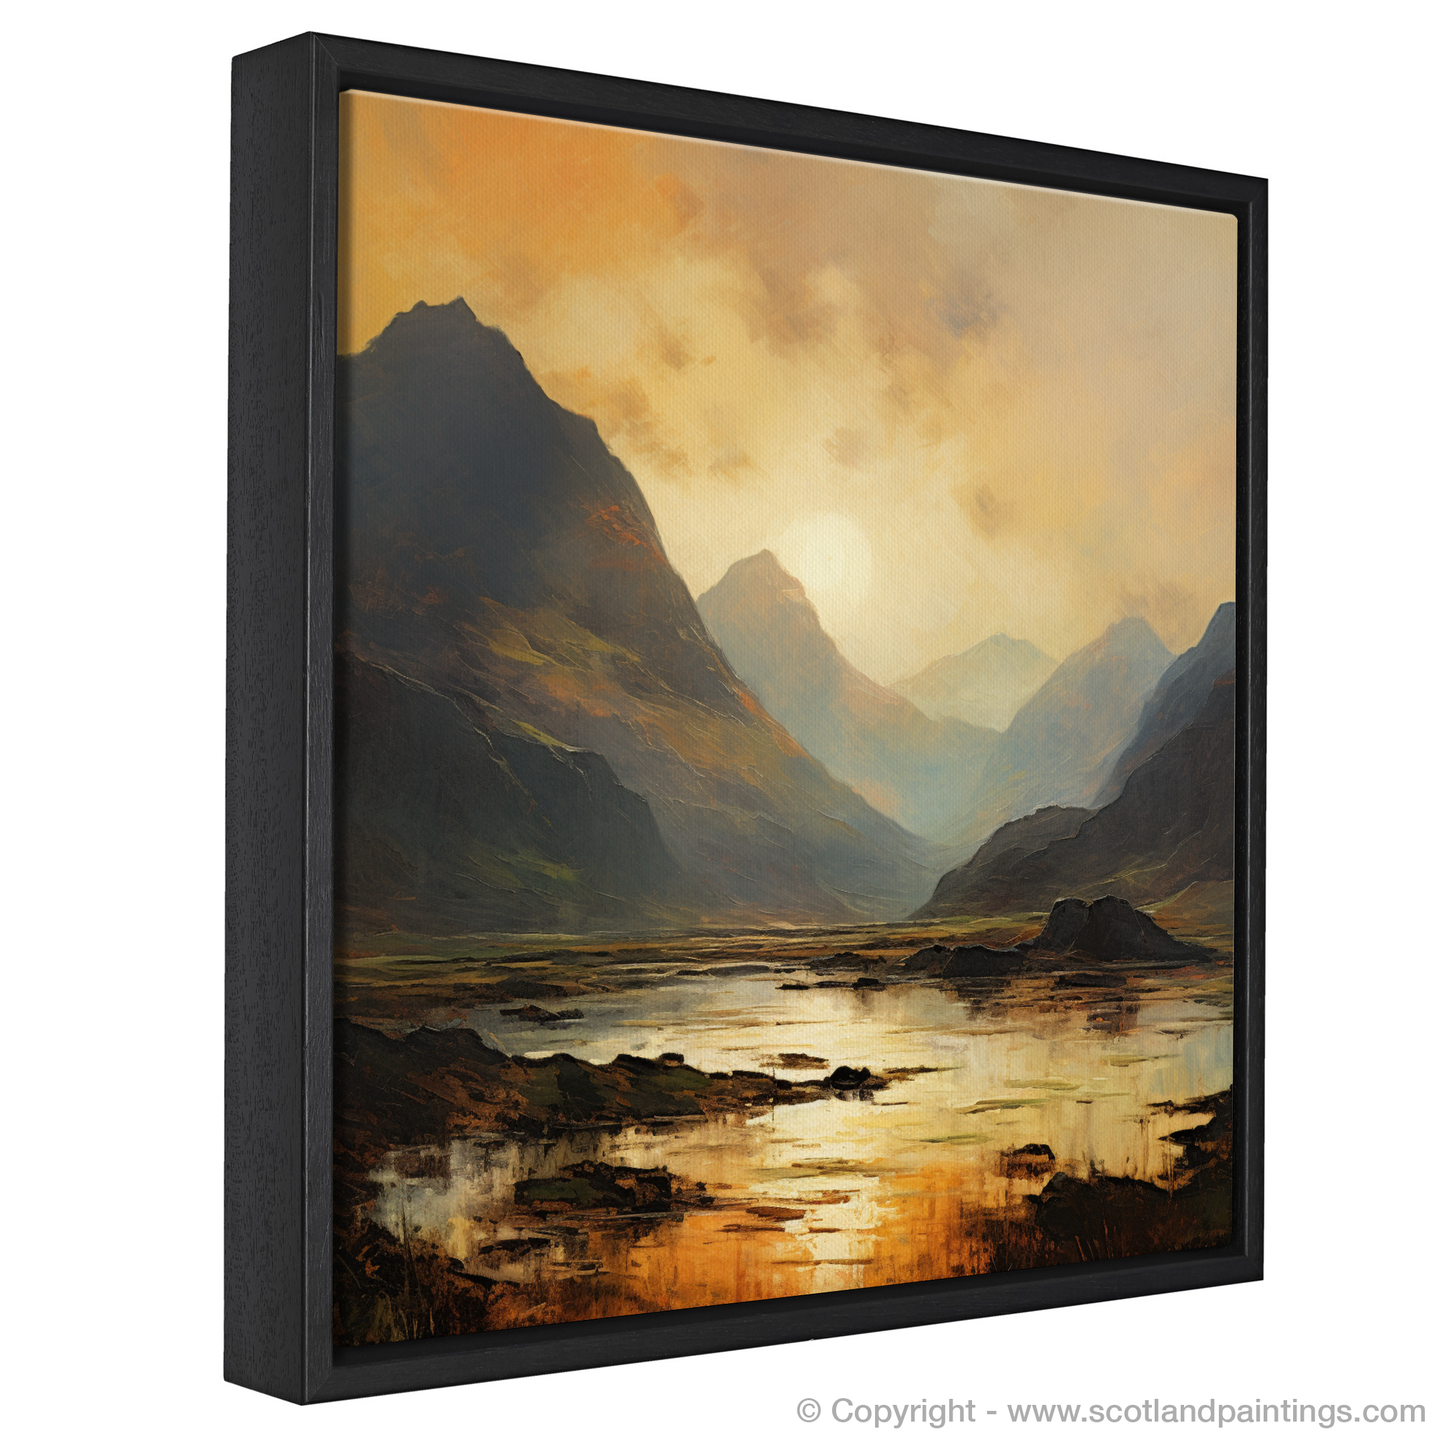 Twilight Tranquility: An Impressionist Homage to Glencoe's Peaks